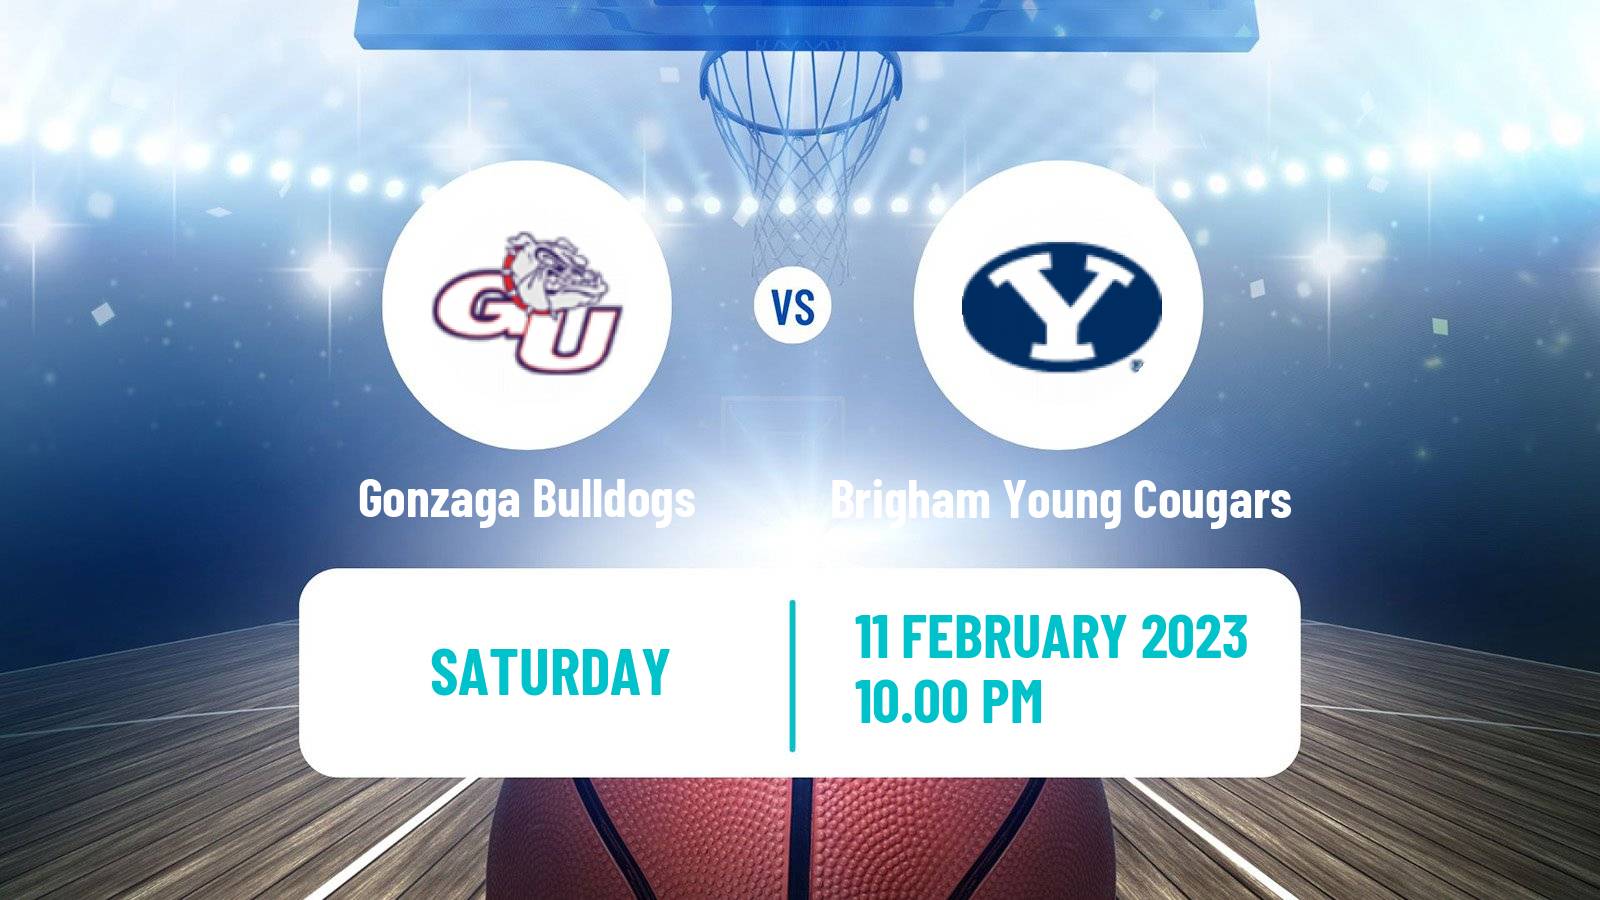 Basketball NCAA College Basketball Gonzaga Bulldogs - Brigham Young Cougars